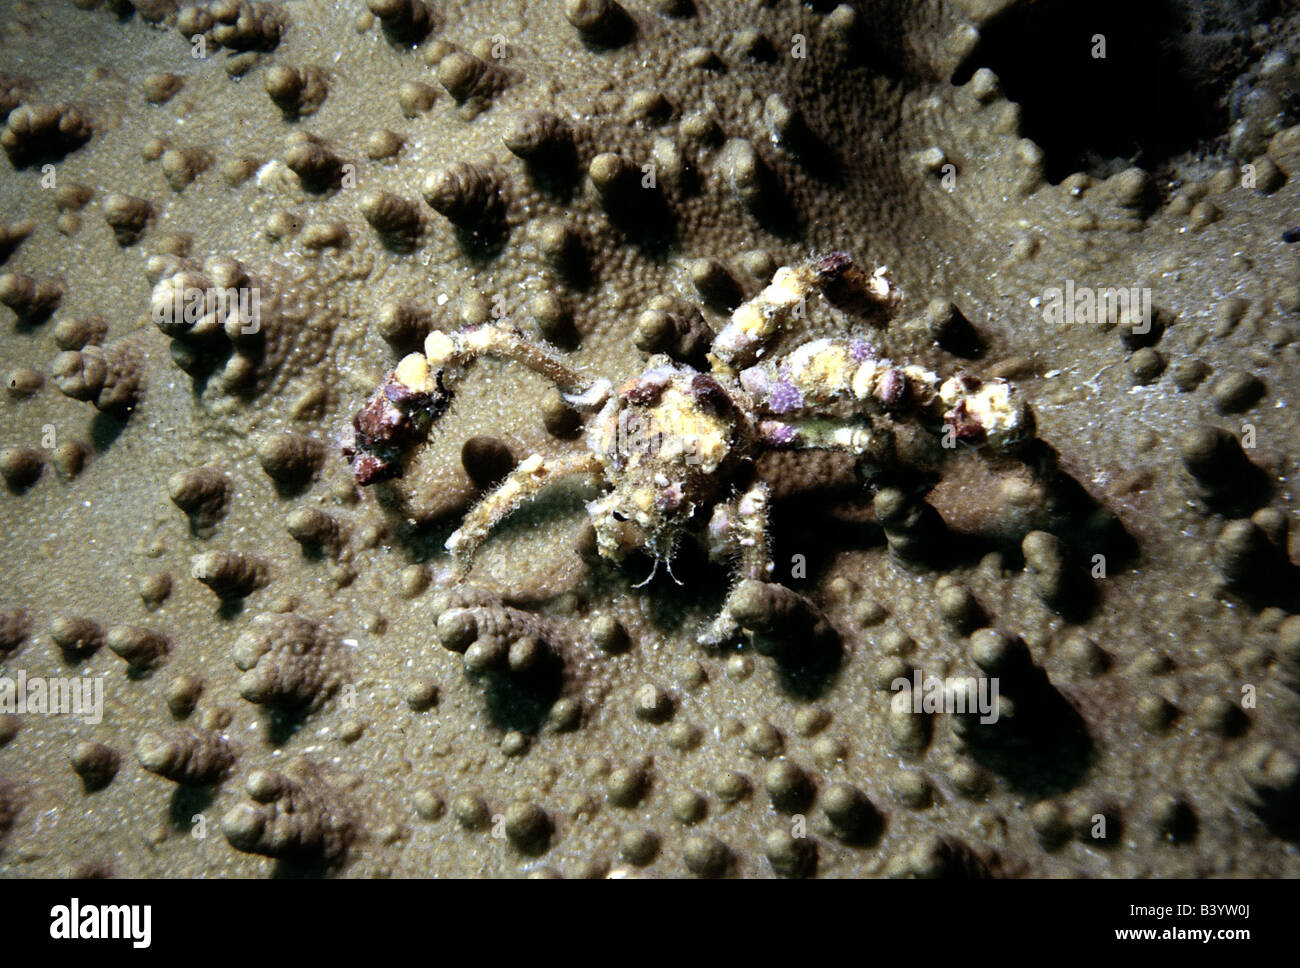 zoology / animals, shellfish / crustacean, Decorator Crab, (Camposcia retusa), in sand, distribution: Indo Pacific Ocean, animal Stock Photo